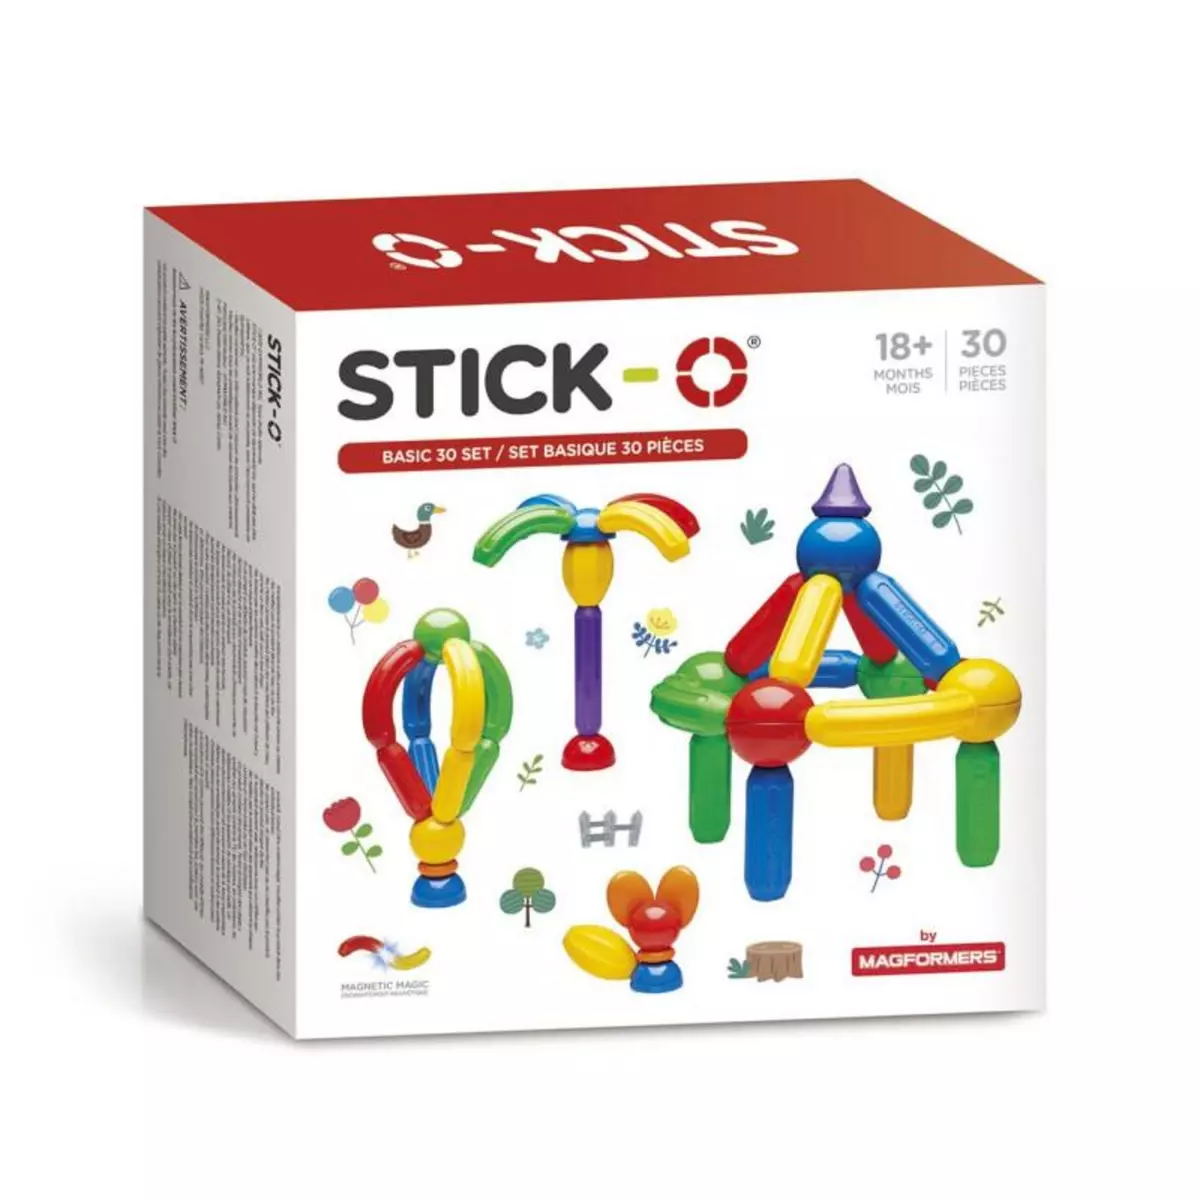 STICK-O Stick-O Basic set, 30 pcs.